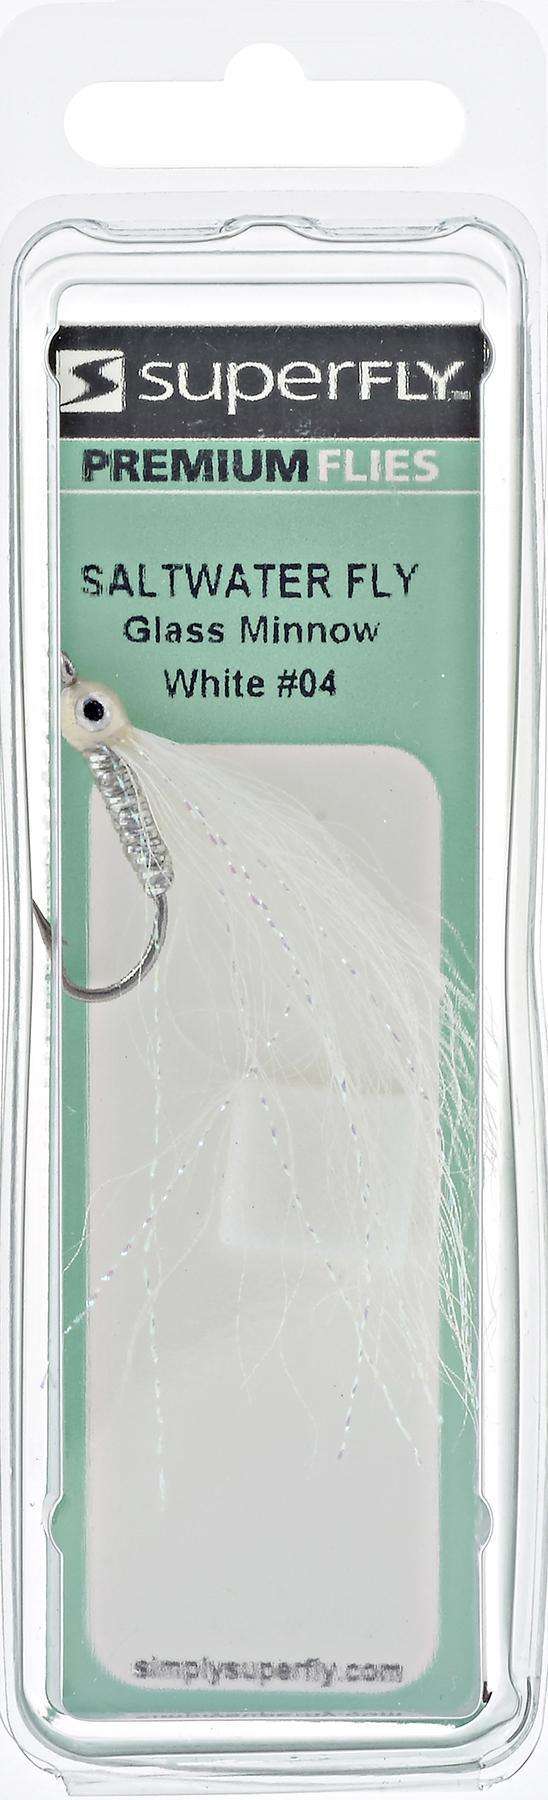 SuperFly White Saltwater Glass Minnow Size #04 - Premium Flies